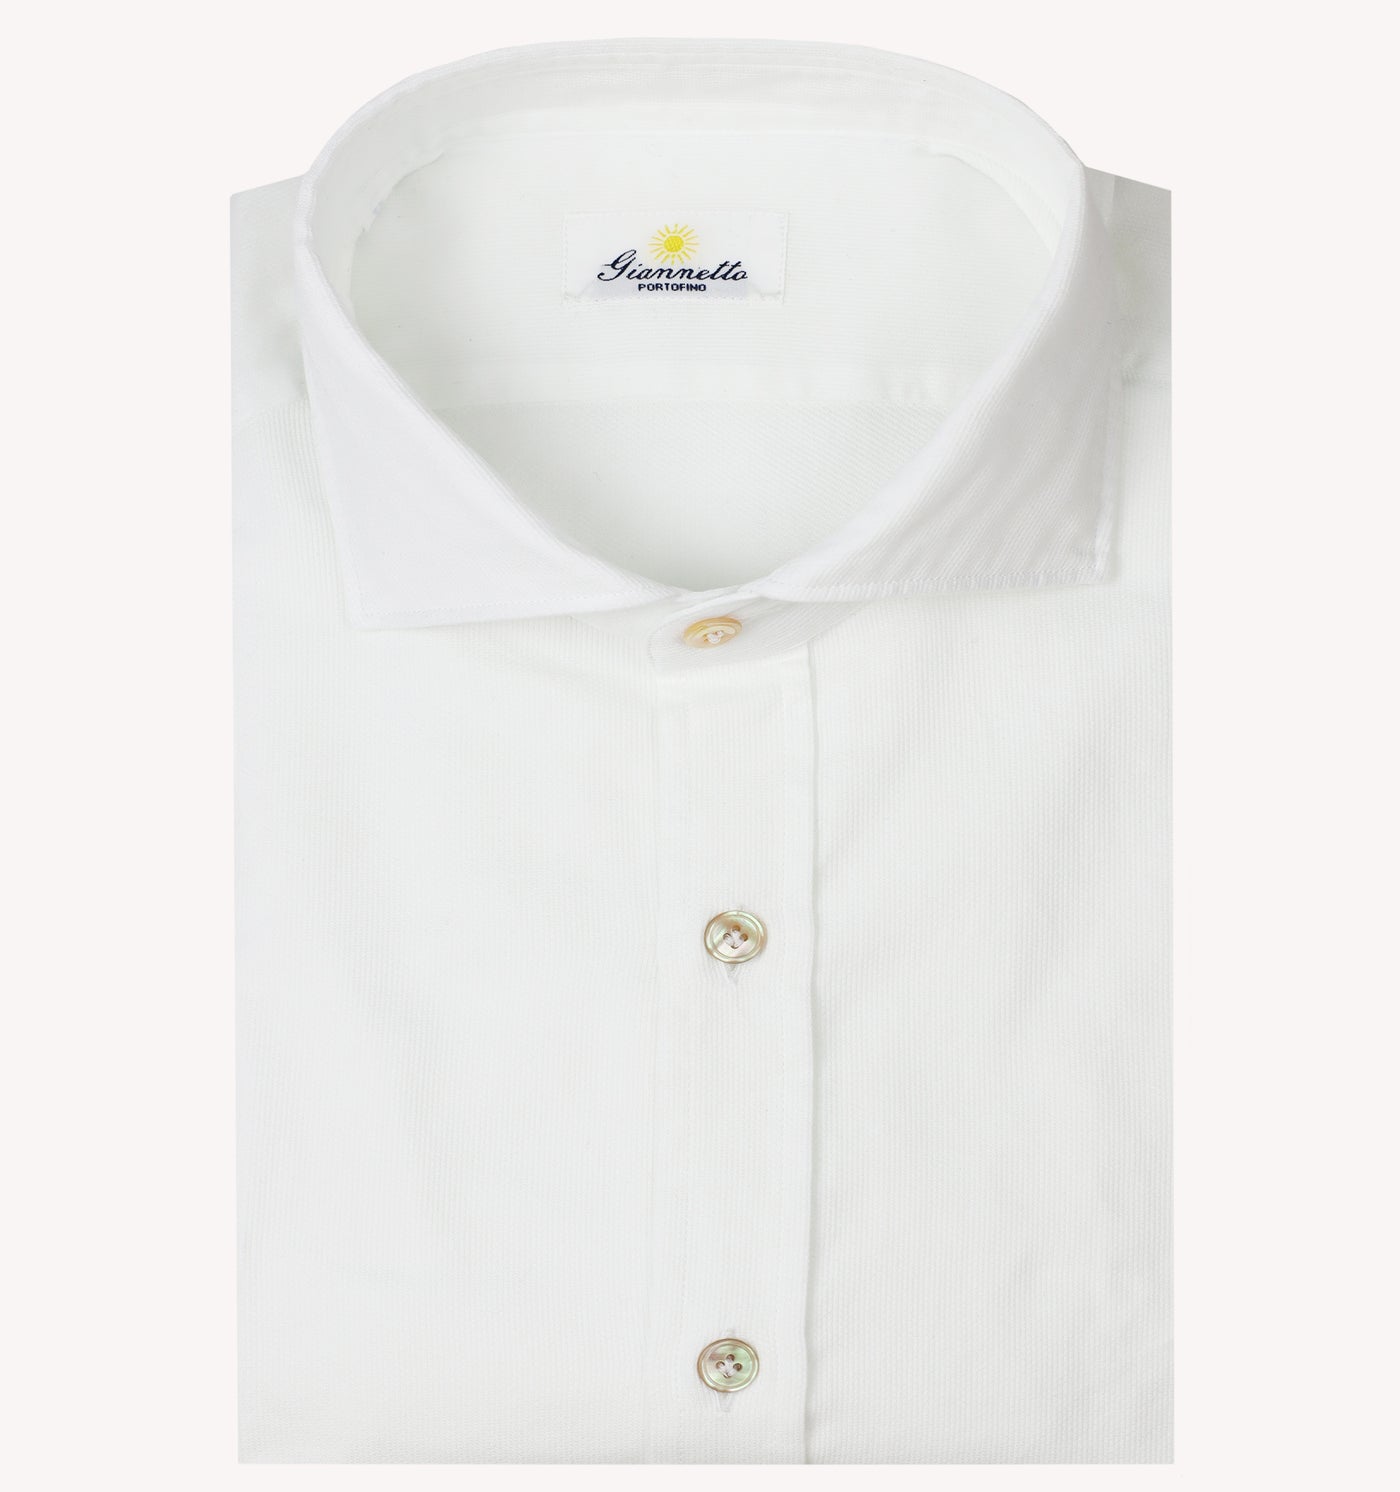 Giannetto Sport Shirt in White